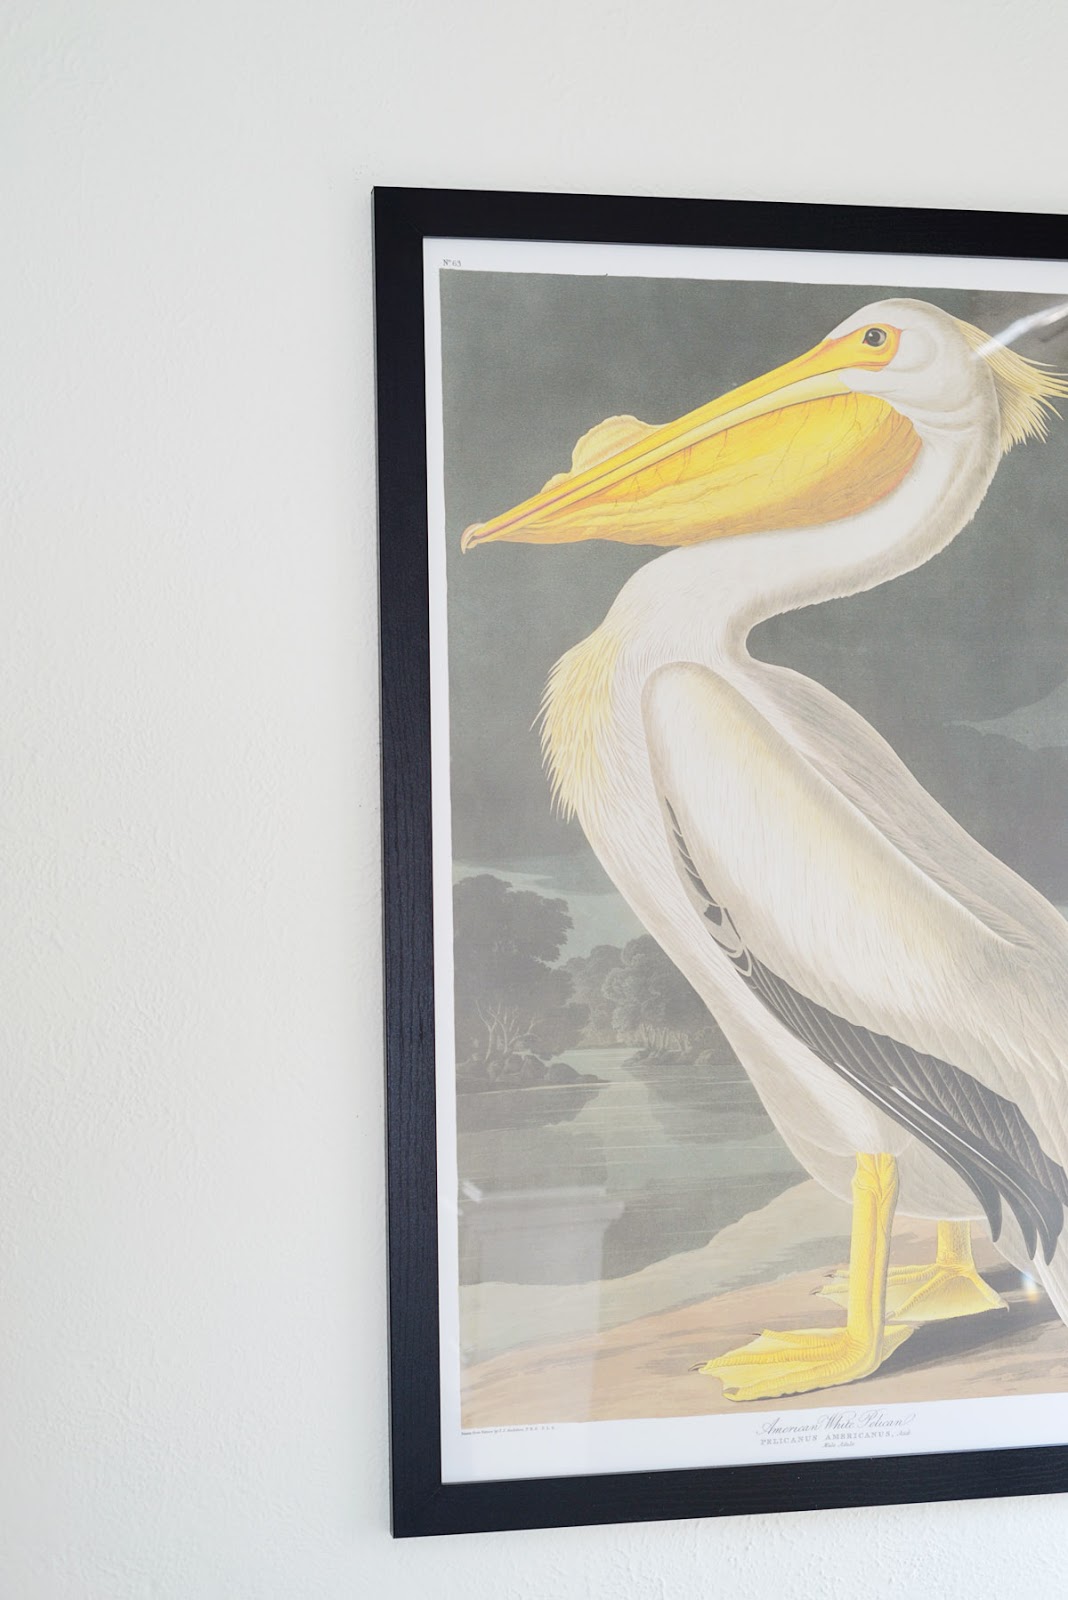 Audubon white pelican free download high res file | RamblingRenovators.ca